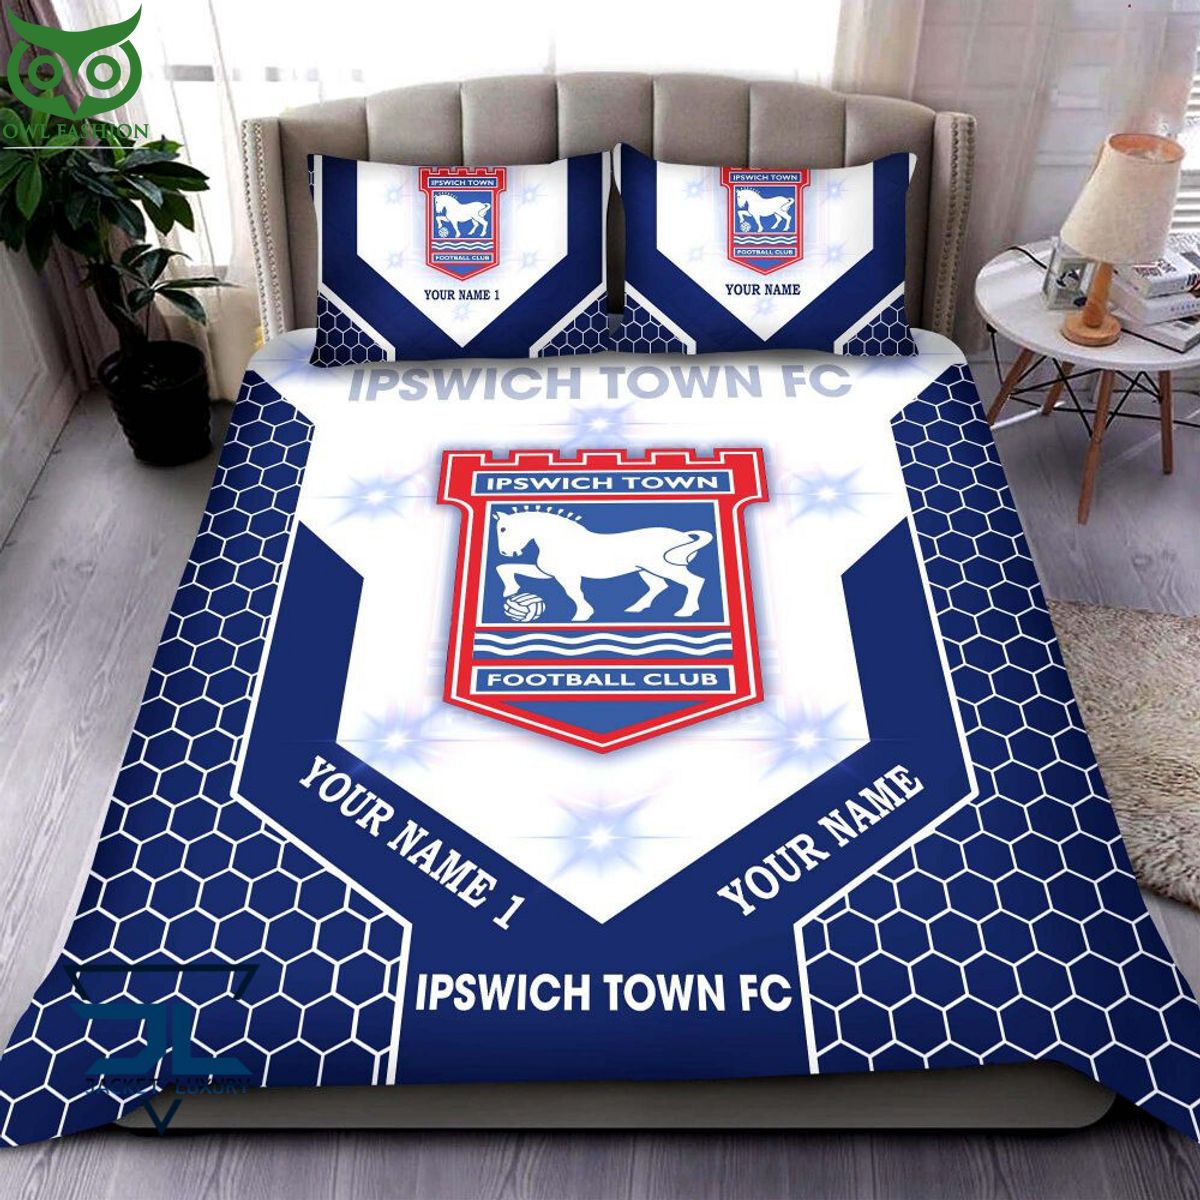 ipswich town f c efl champion customized bedding set 1 0cYRp.jpg